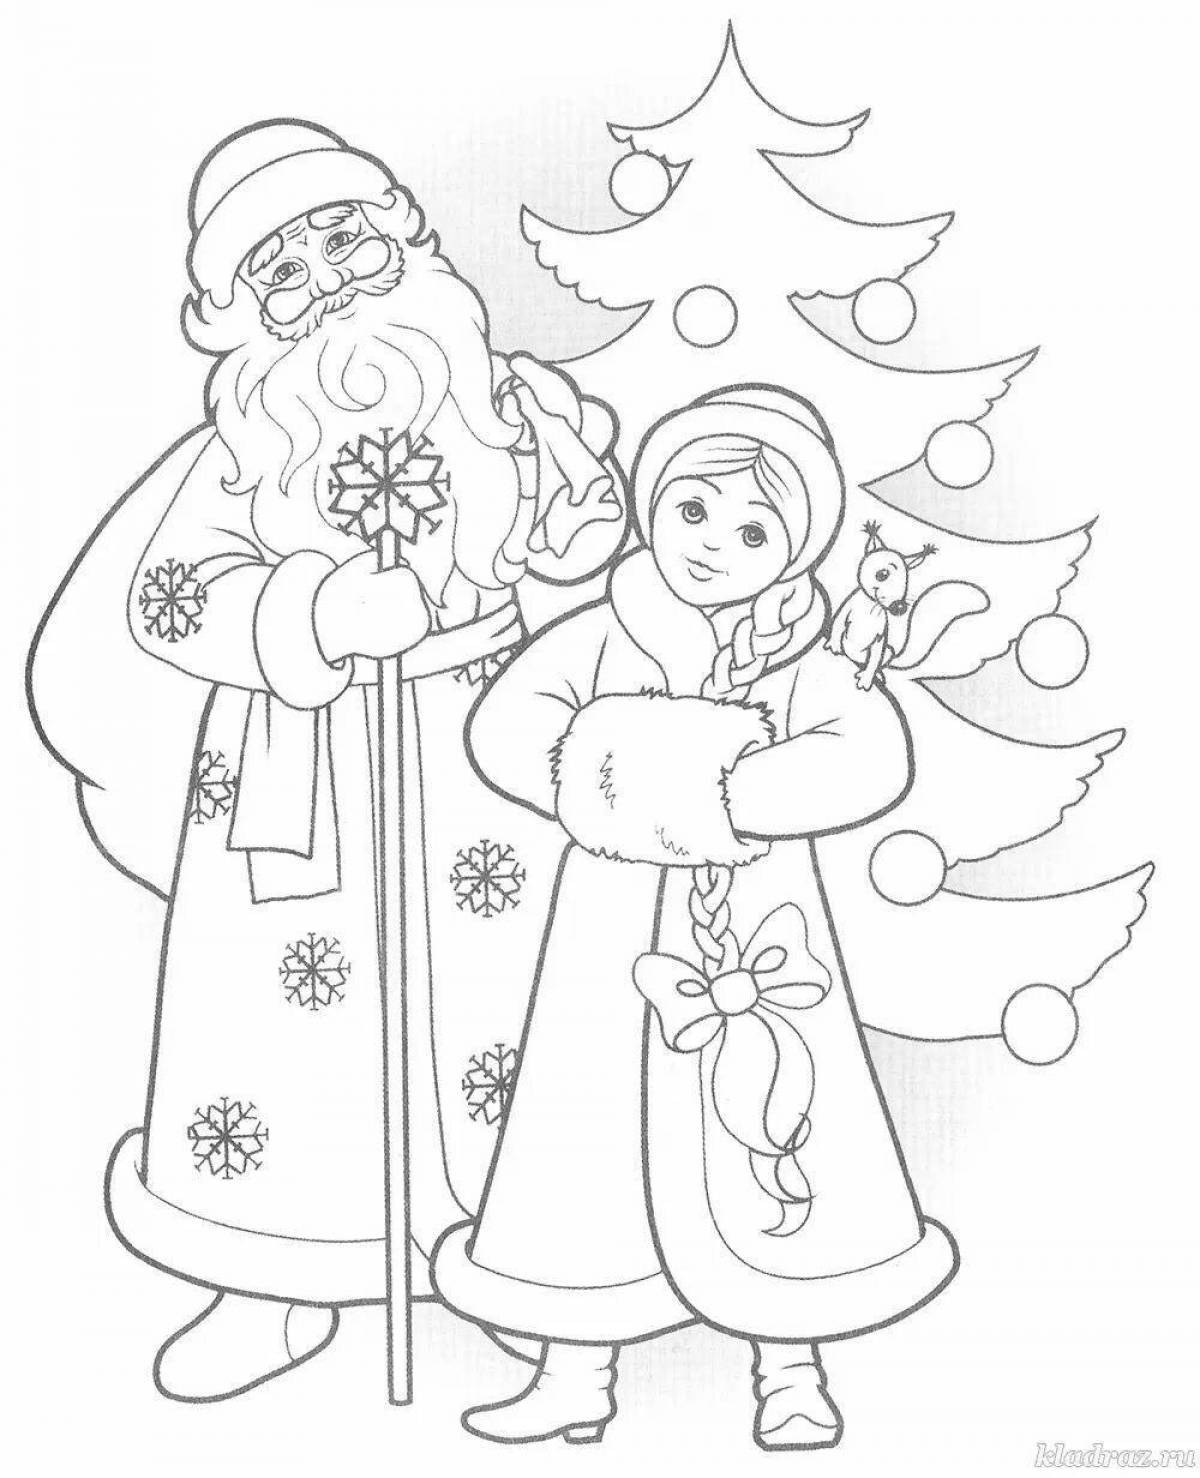 Раскраска дед Мороза и Снегурочки вместе с елкой